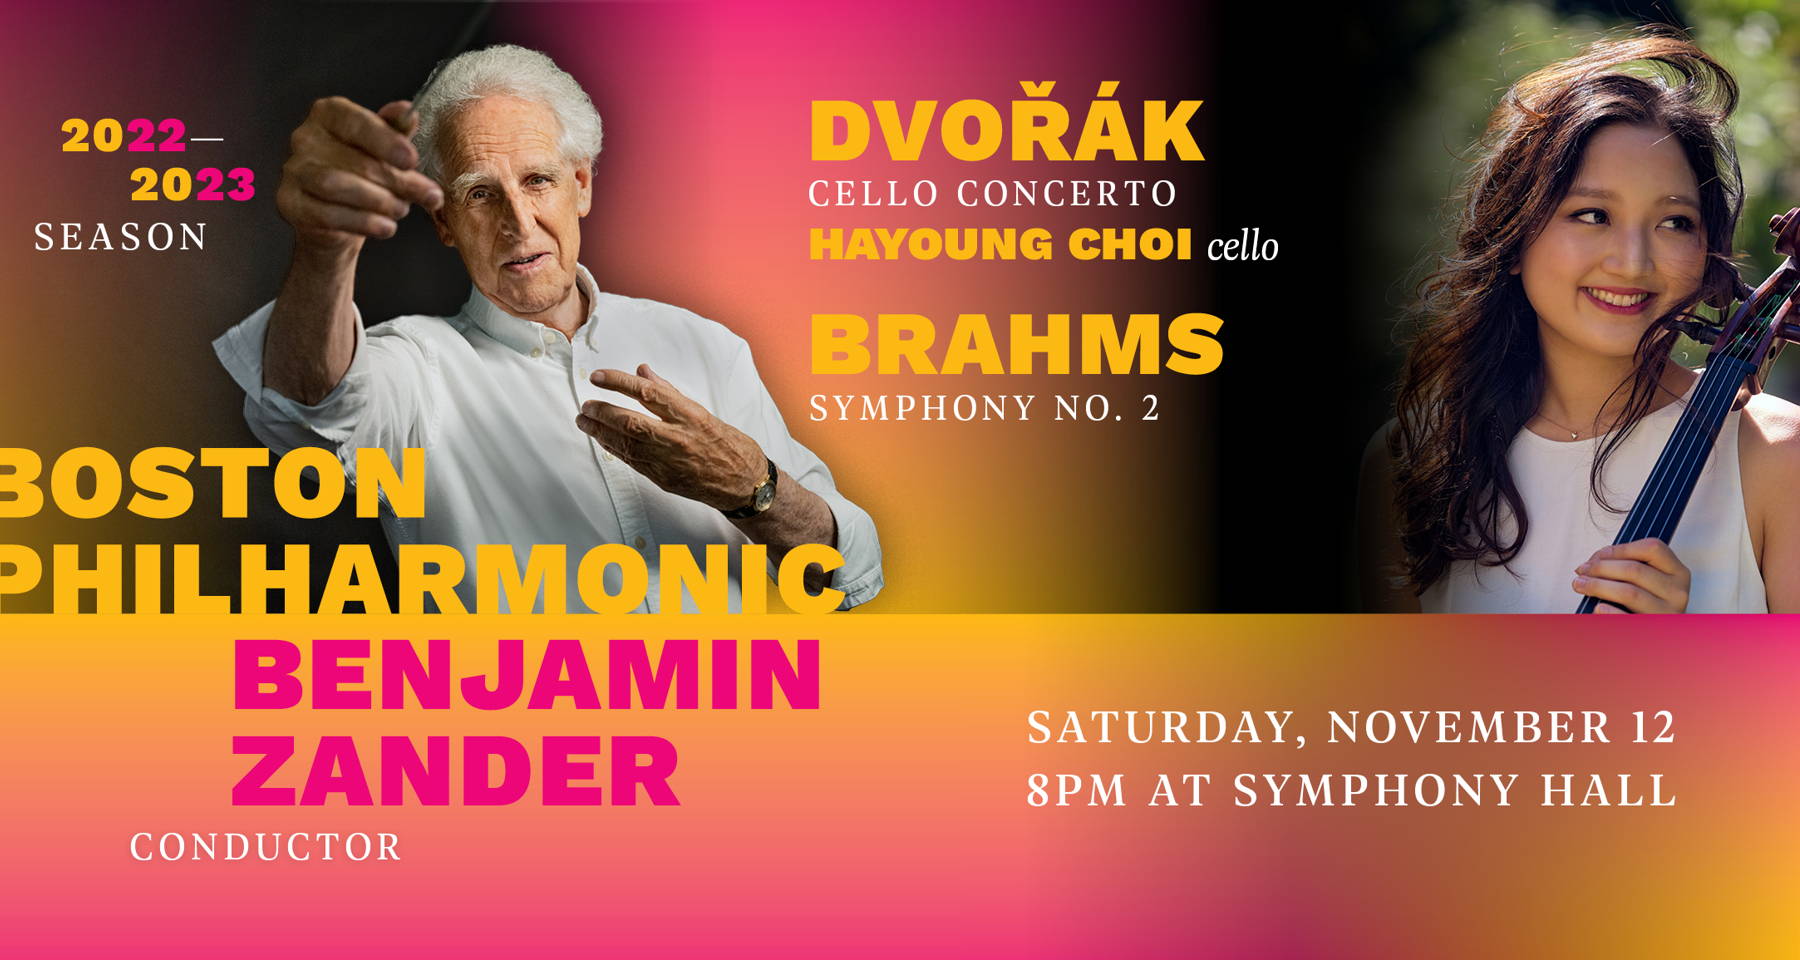 Boston Philharmonic presents: Dvorak and Brahms with award winning cellist Hayoung Choi!